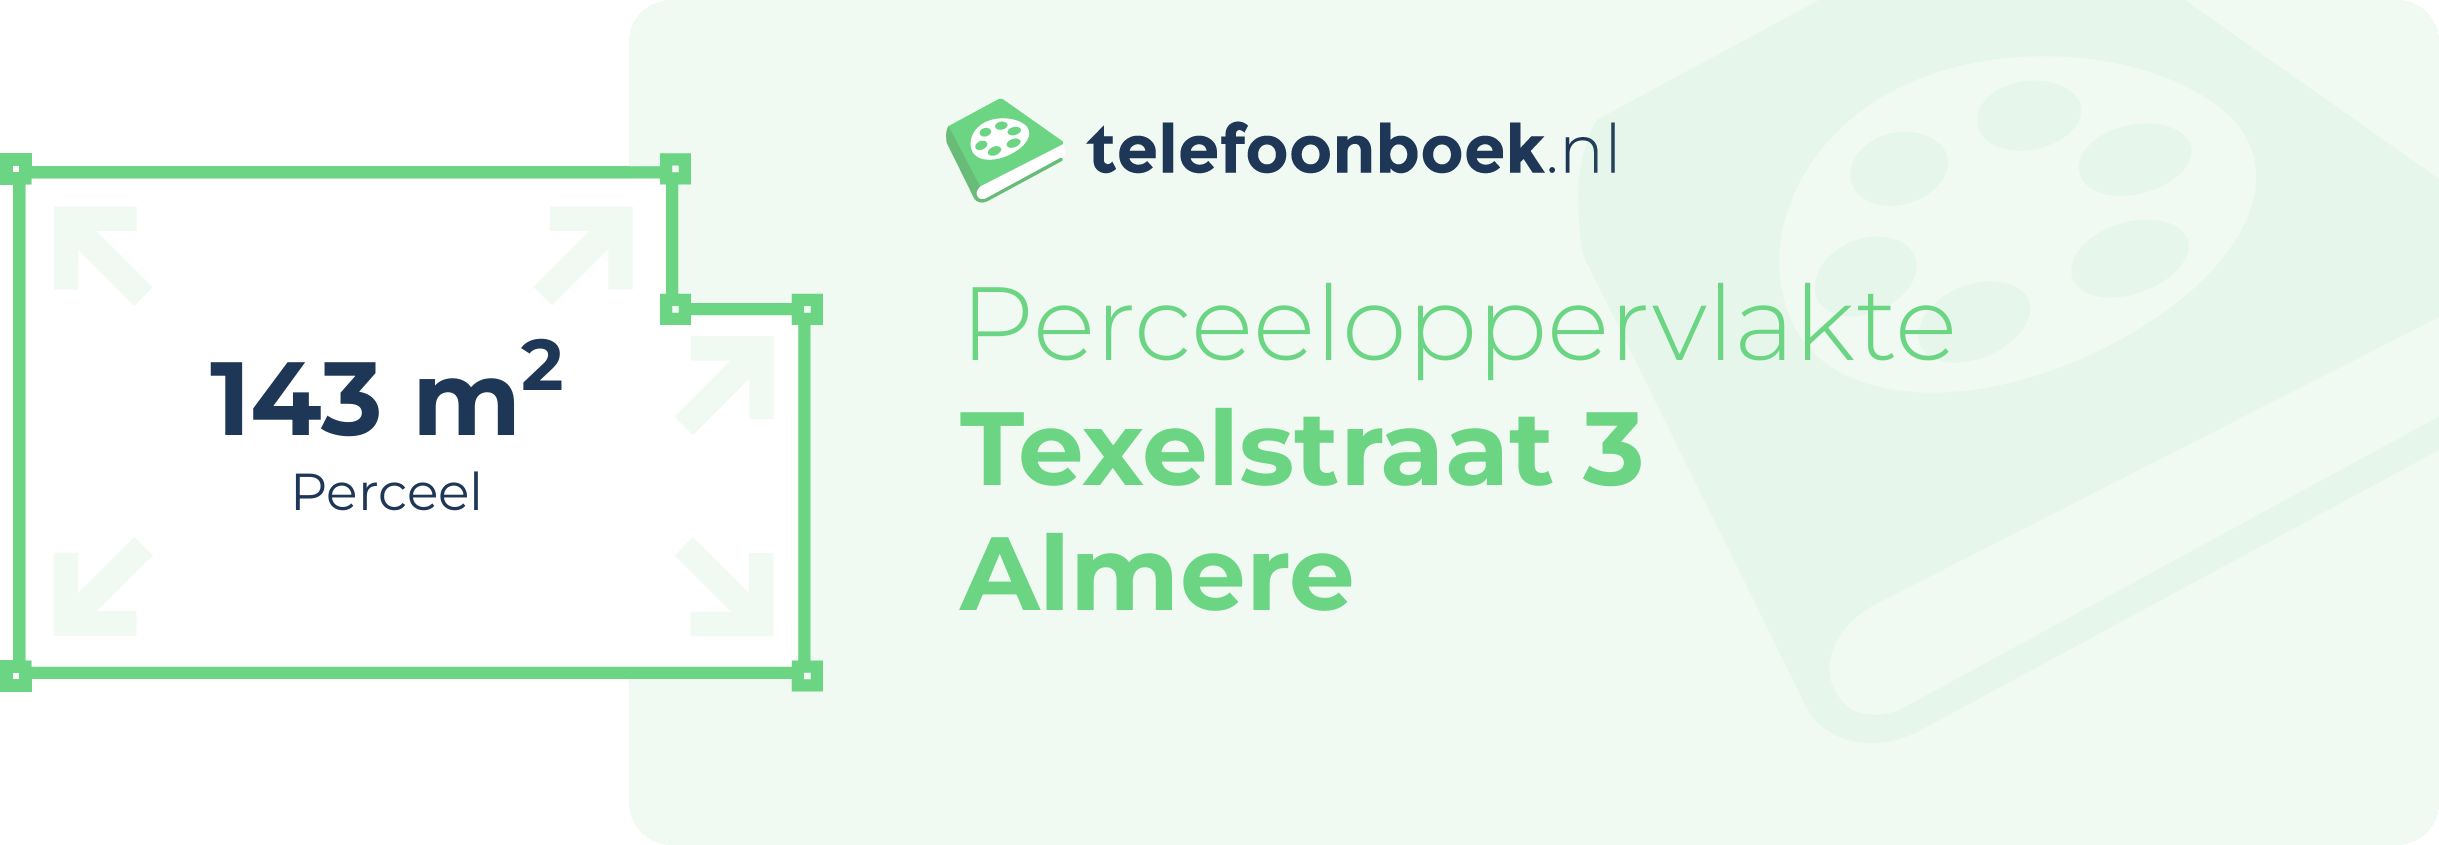 Perceeloppervlakte Texelstraat 3 Almere